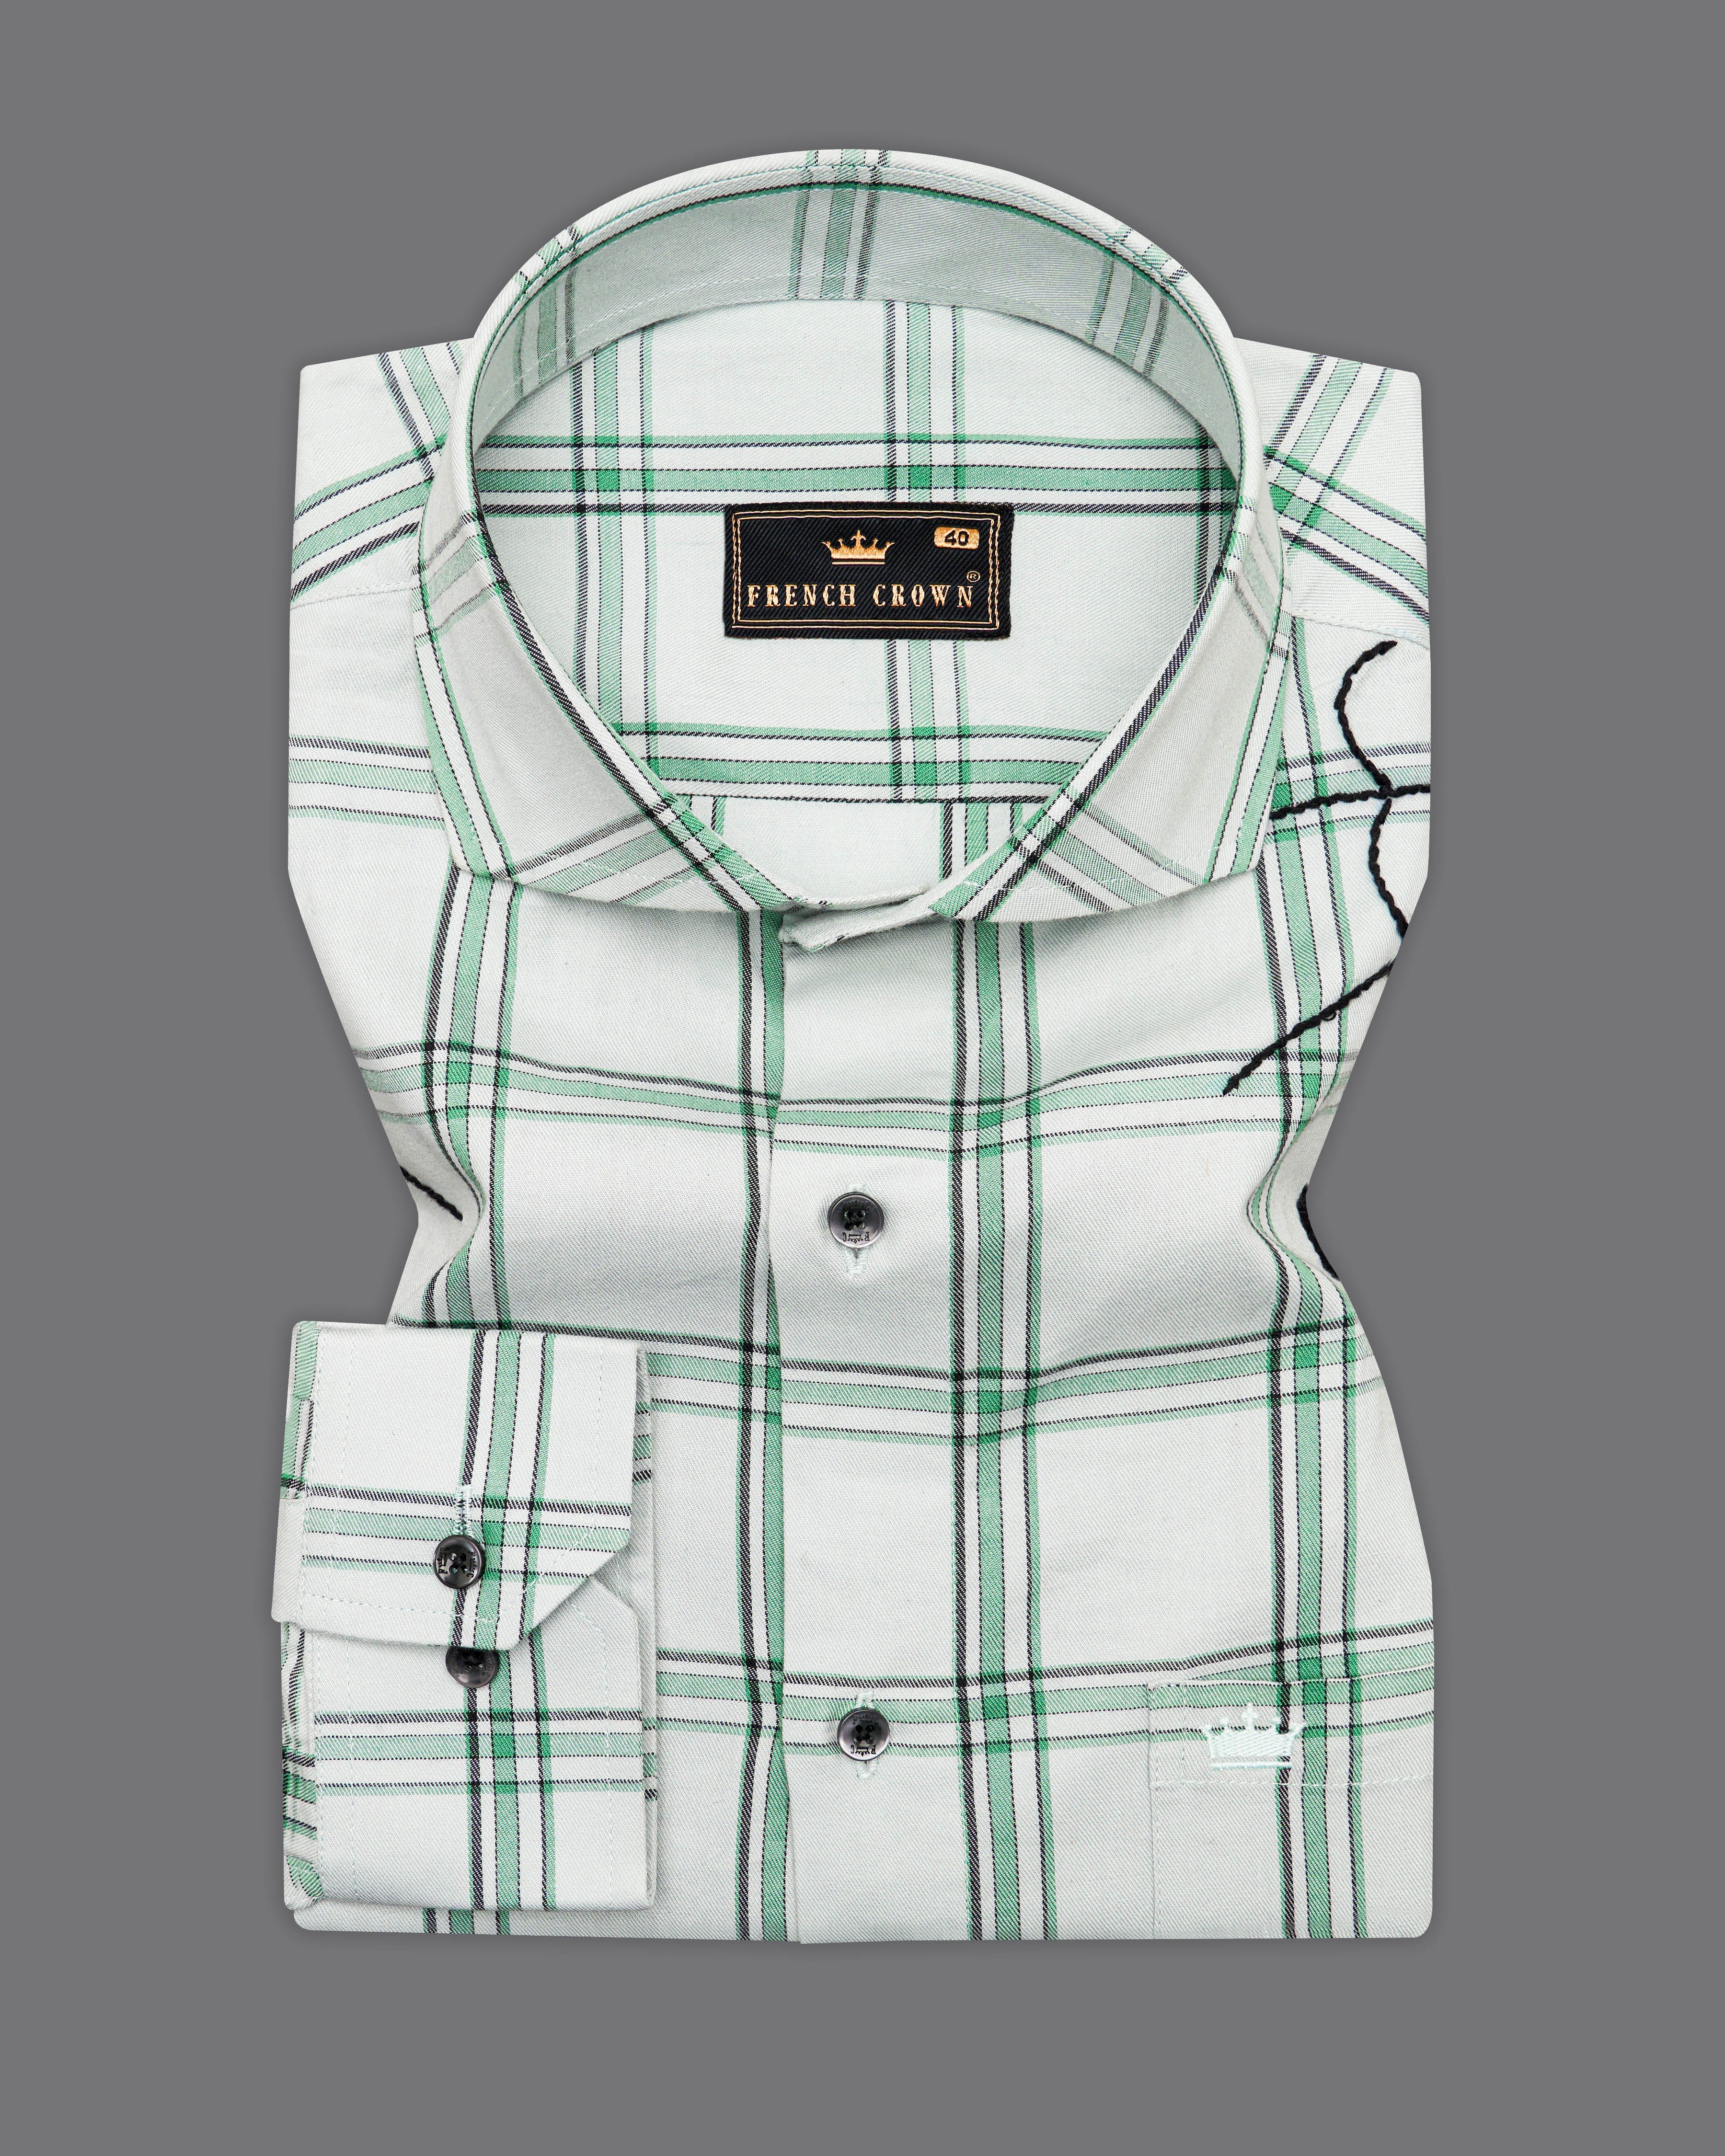 Iron Gray With Green Twill Checkered Premium Cotton Web Hand Embroidered Designer Shirt 6351-CA-BLK-EH063-38, 6351-CA-BLK-EH063-H-38, 6351-CA-BLK-EH063-39, 6351-CA-BLK-EH063-H-39, 6351-CA-BLK-EH063-40, 6351-CA-BLK-EH063-H-40, 6351-CA-BLK-EH063-42, 6351-CA-BLK-EH063-H-42, 6351-CA-BLK-EH063-44, 6351-CA-BLK-EH063-H-44, 6351-CA-BLK-EH063-46, 6351-CA-BLK-EH063-H-46, 6351-CA-BLK-EH063-48, 6351-CA-BLK-EH063-H-48, 6351-CA-BLK-EH063-50, 6351-CA-BLK-EH063-H-50, 6351-CA-BLK-EH063-52, 6351-CA-BLK-EH063-H-52